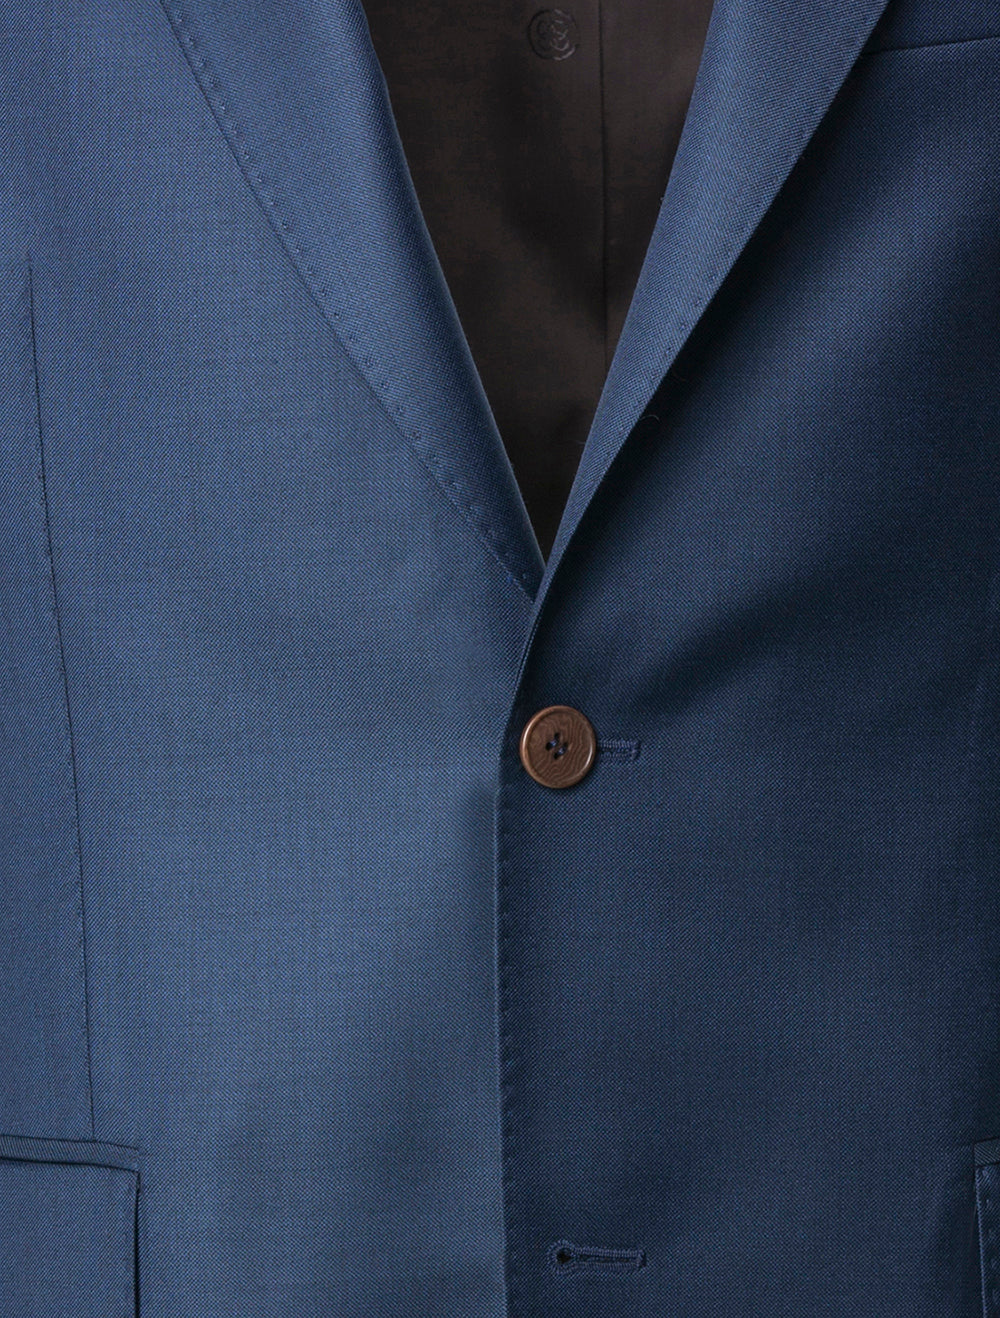 CAVALIERE - PAXTON Navy Blue Slim Fit Suit Jacket 1013029-79